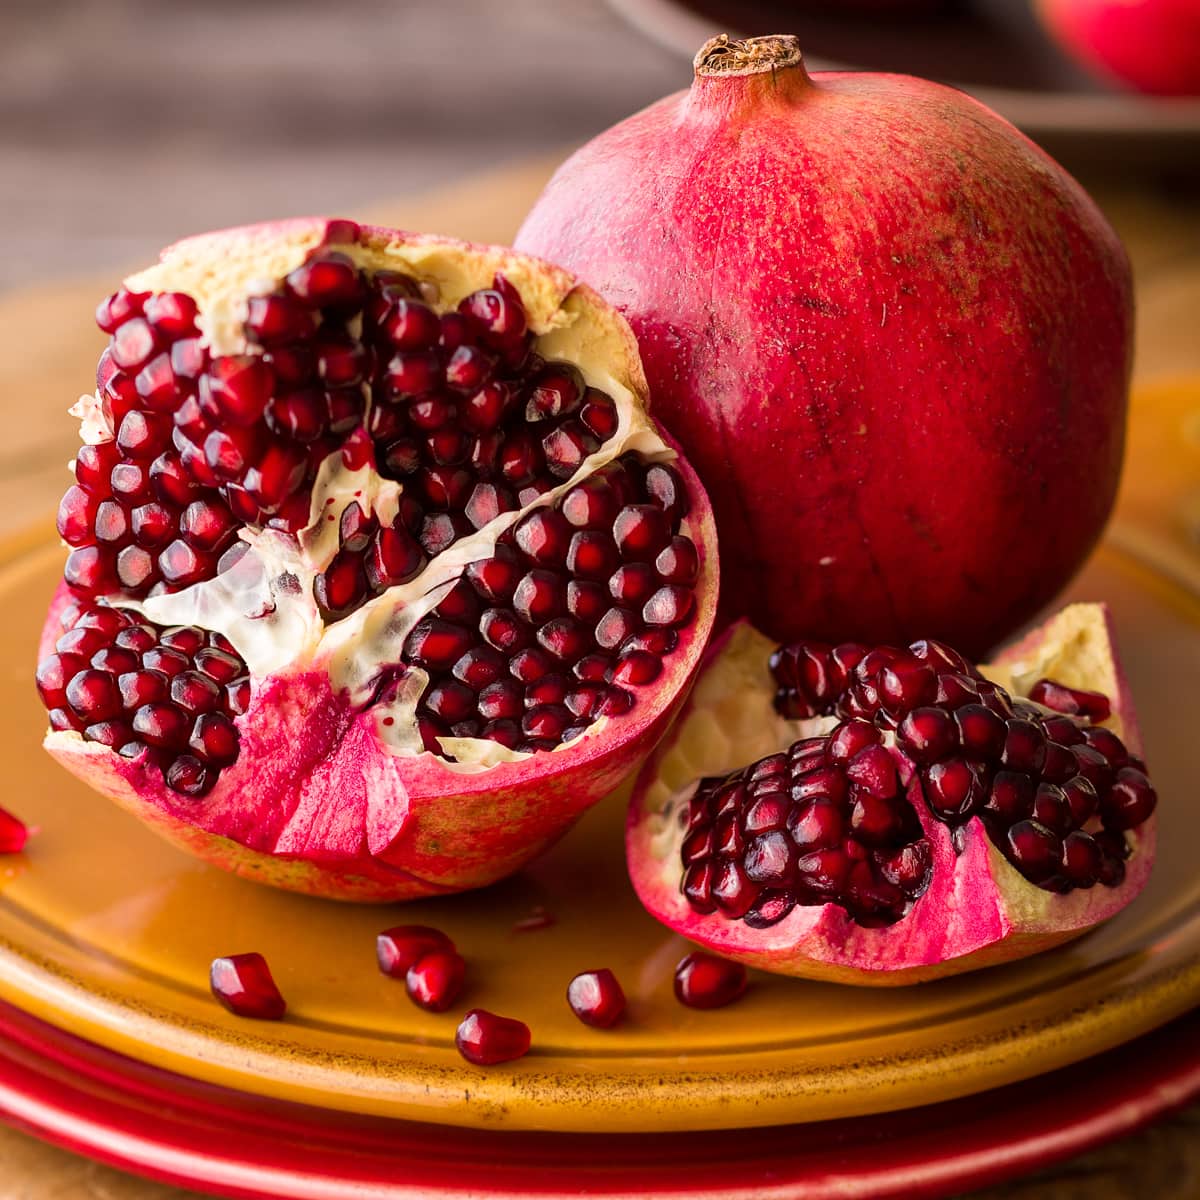 Beautiful ruby red pomegranate fruit cut open.